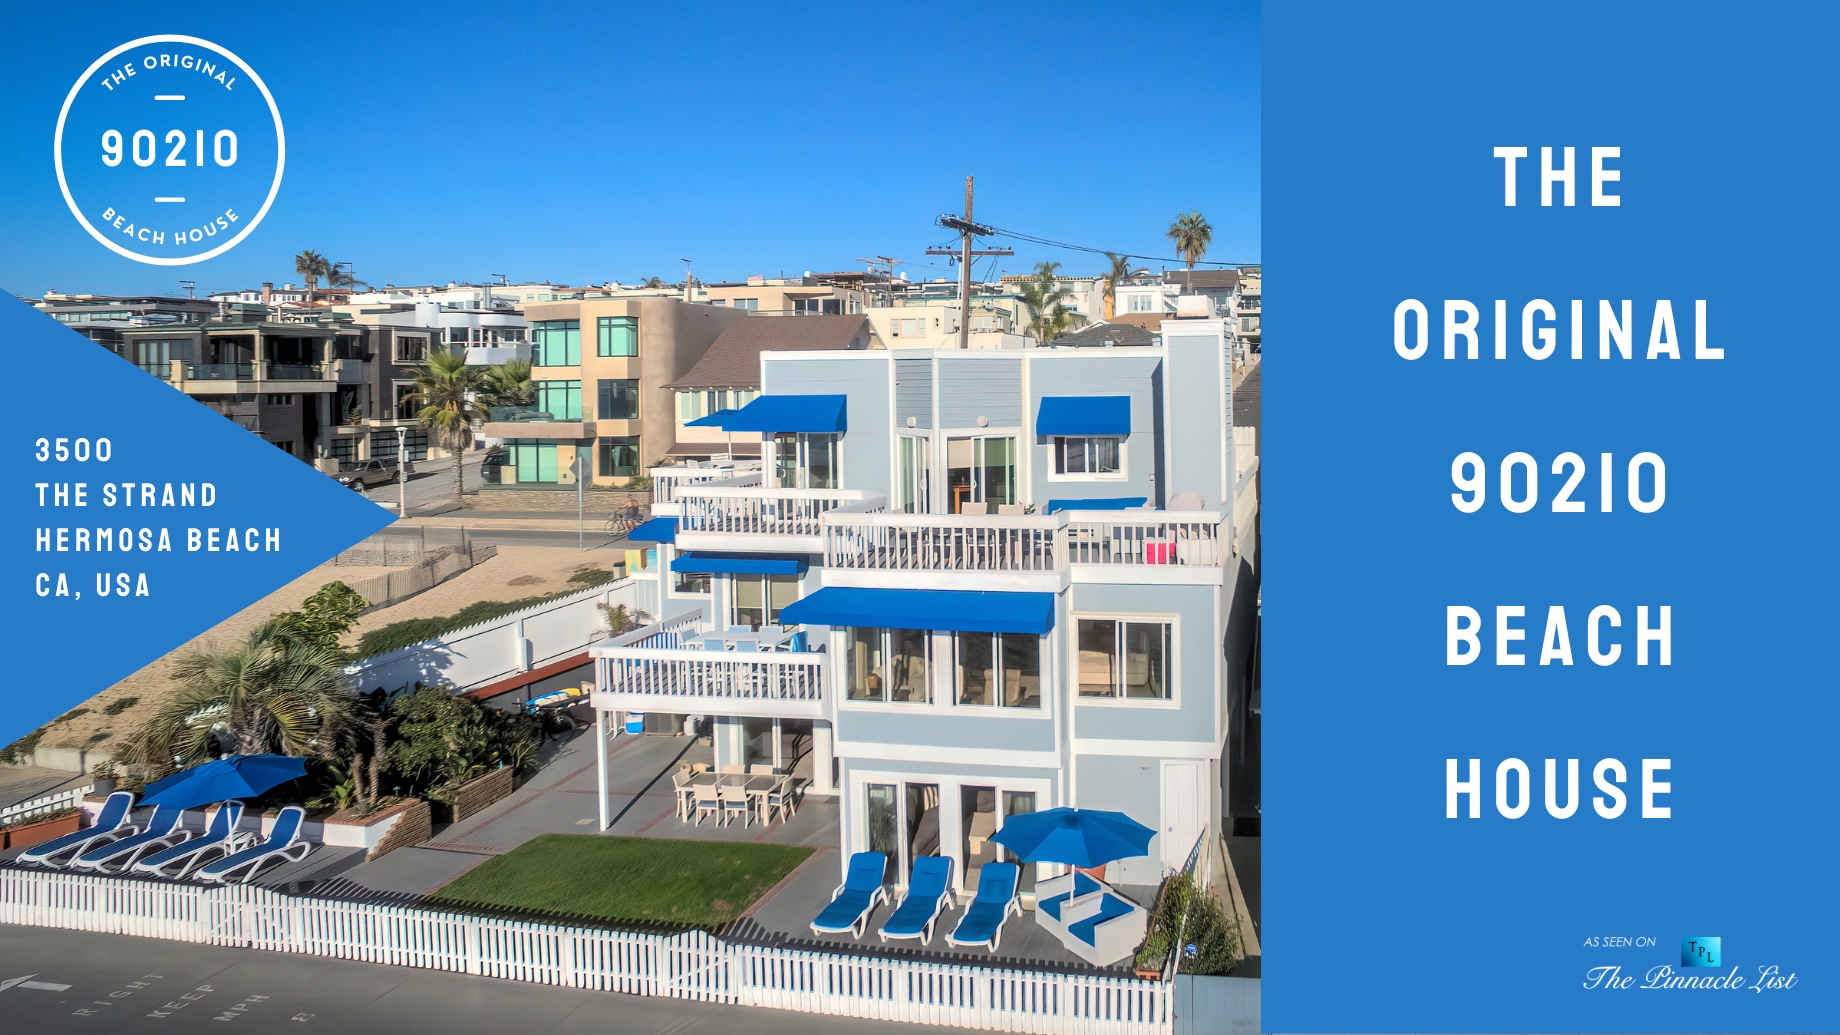 The Original 90210 Beach House - 3500 The Strand, Hermosa Beach, CA, USA